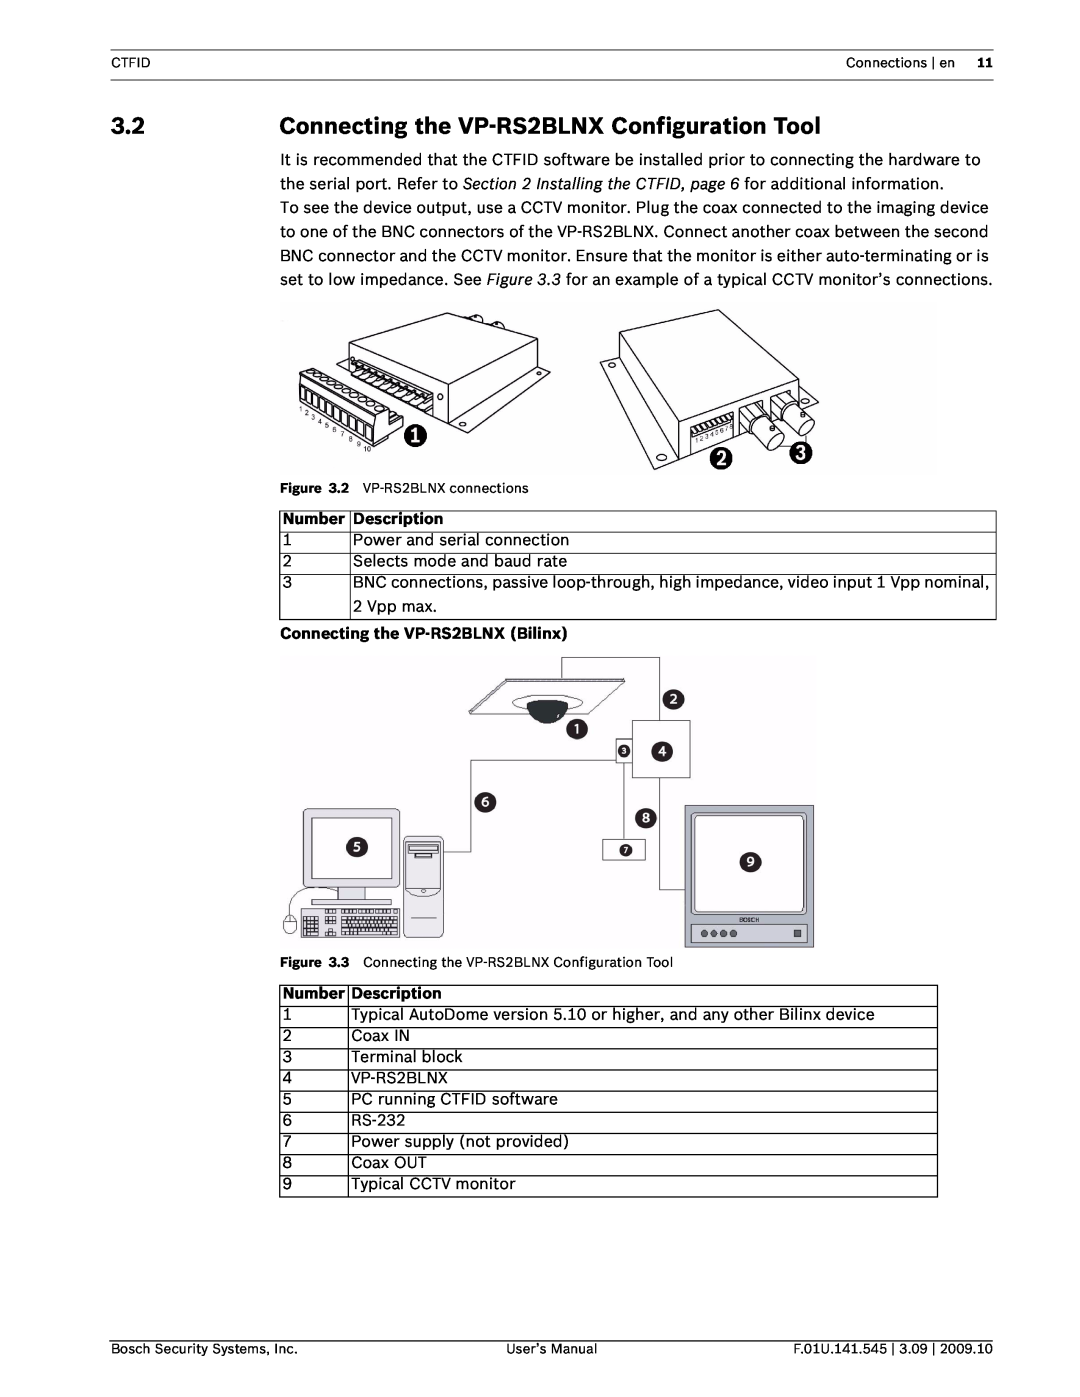 Bosch Appliances VP-CFGSFT user manual 3.2Connecting the VP-RS2BLNXConfiguration Tool, Number Description 